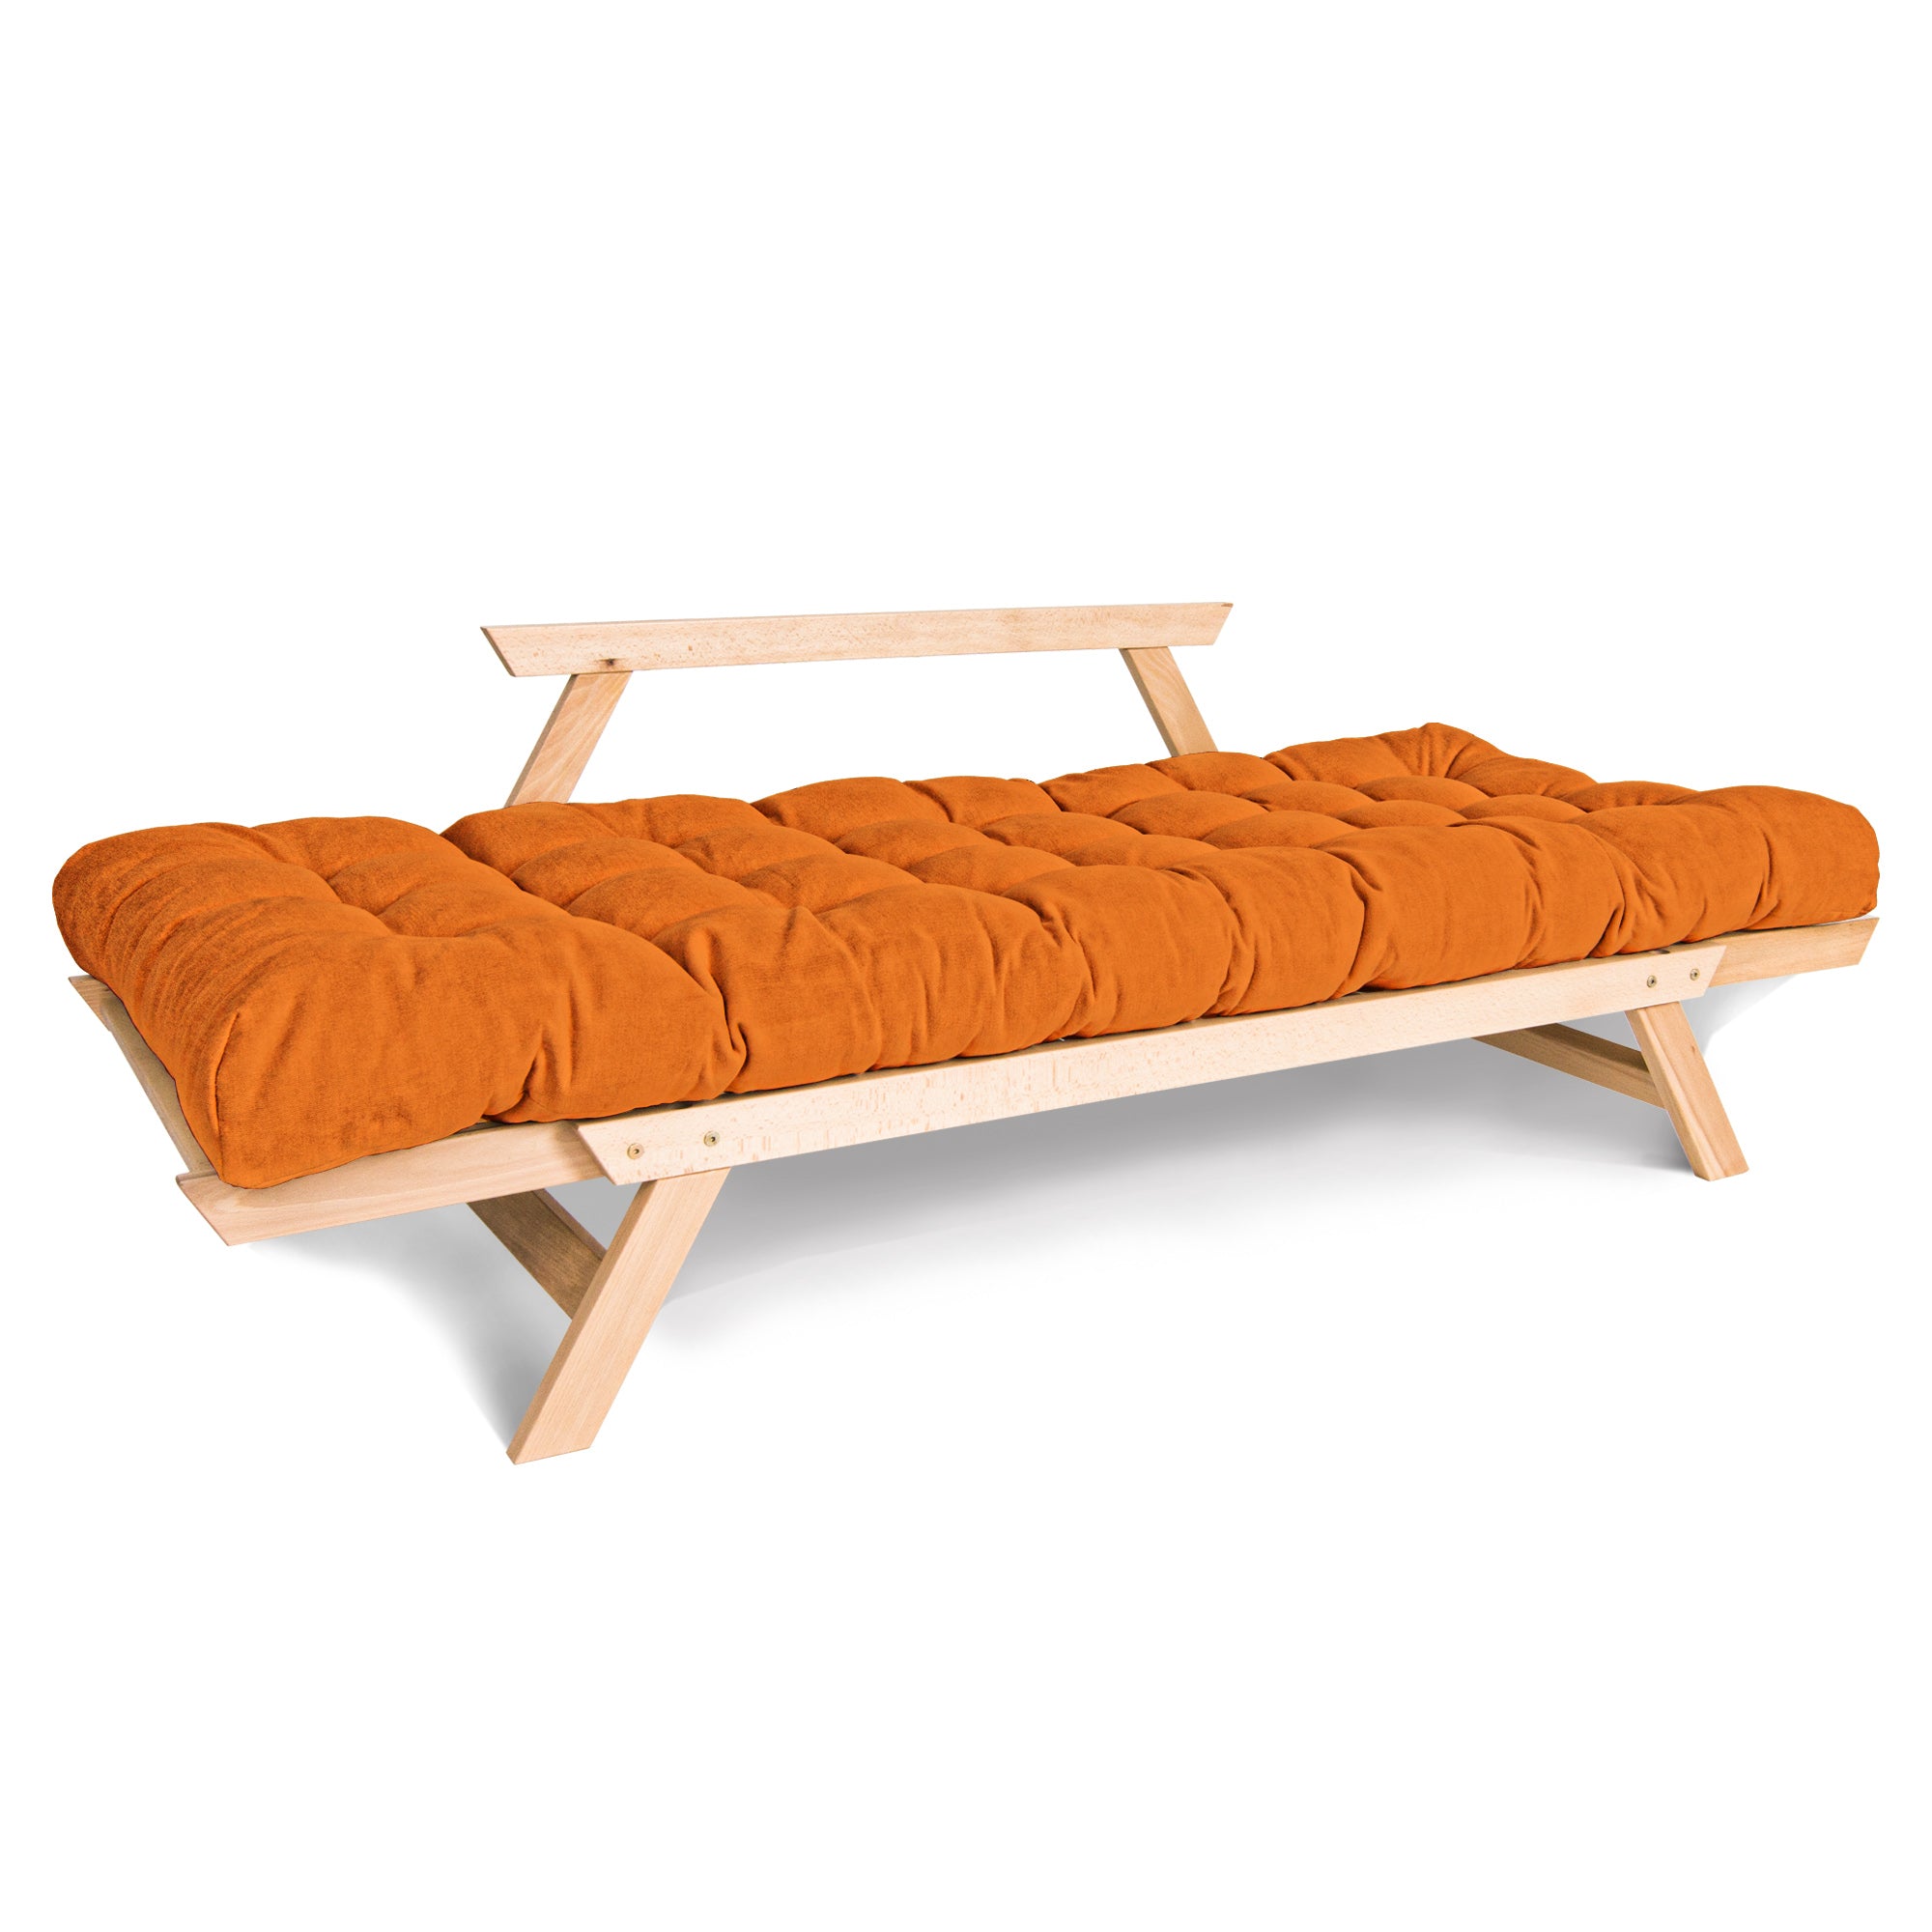 ALLEGRO Folding Sofa Bed, Beech Wood Frame, Natural